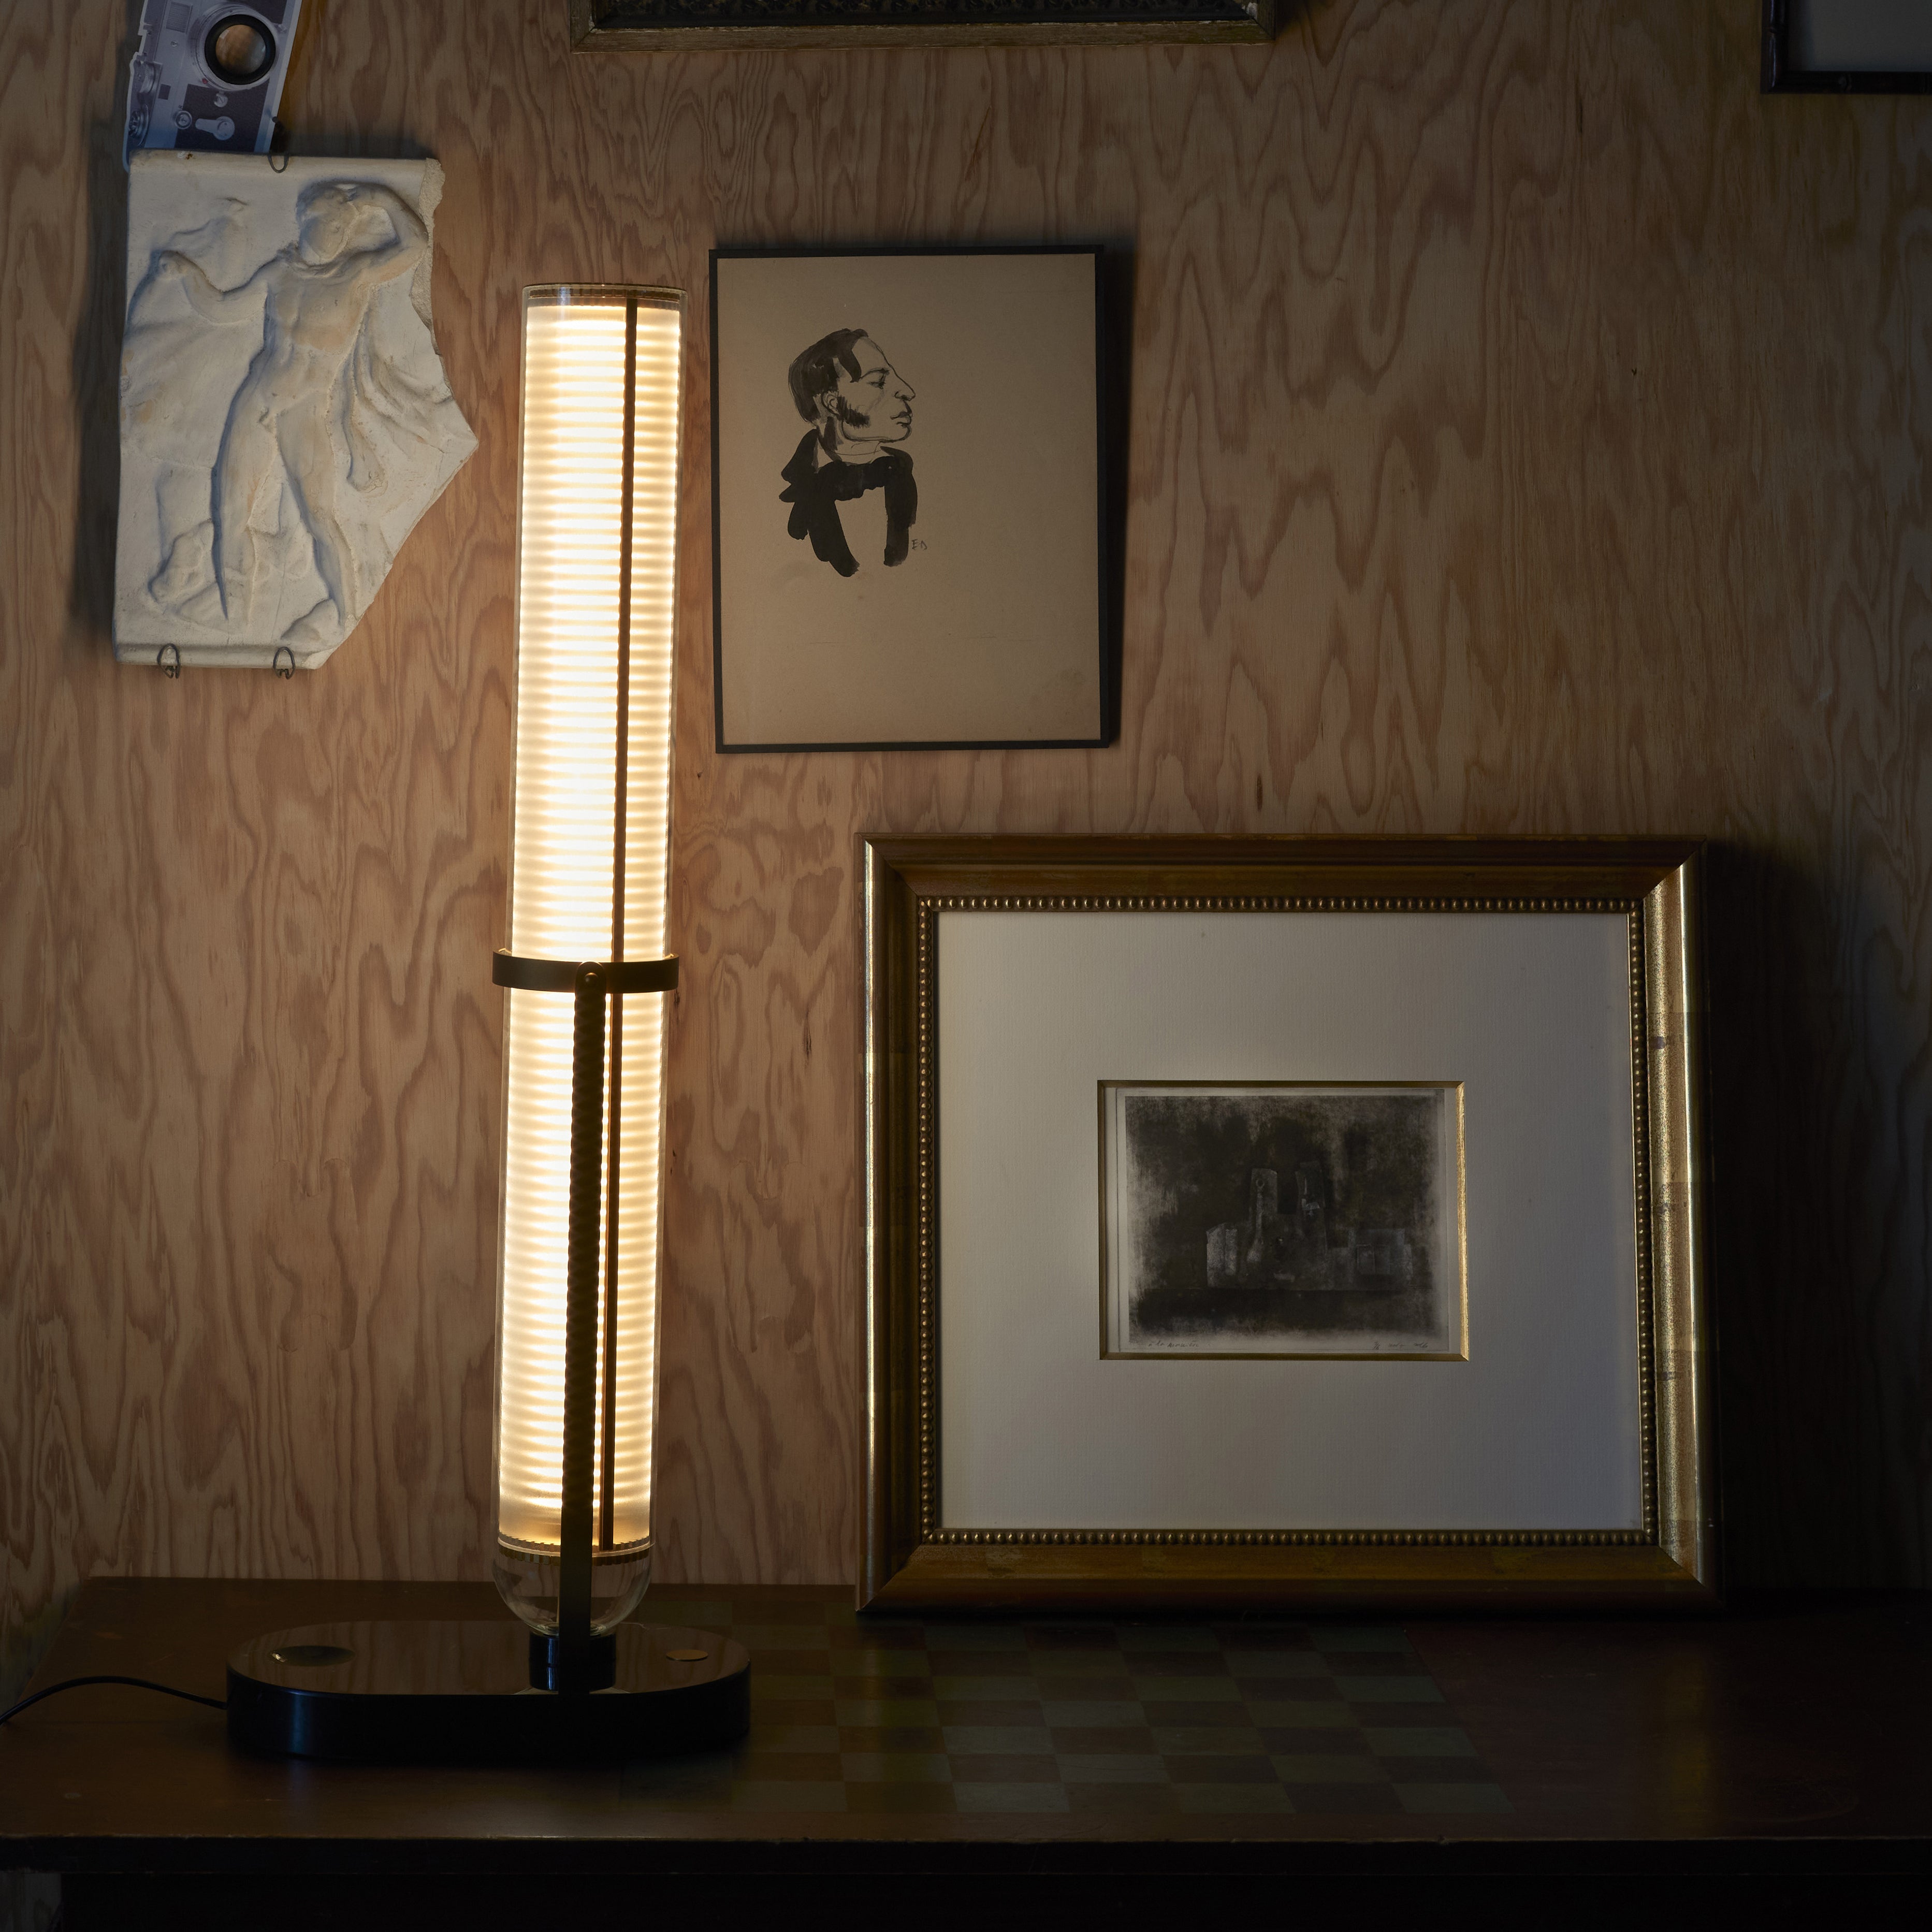 La Lampe Frechin Table + Floor Lamp